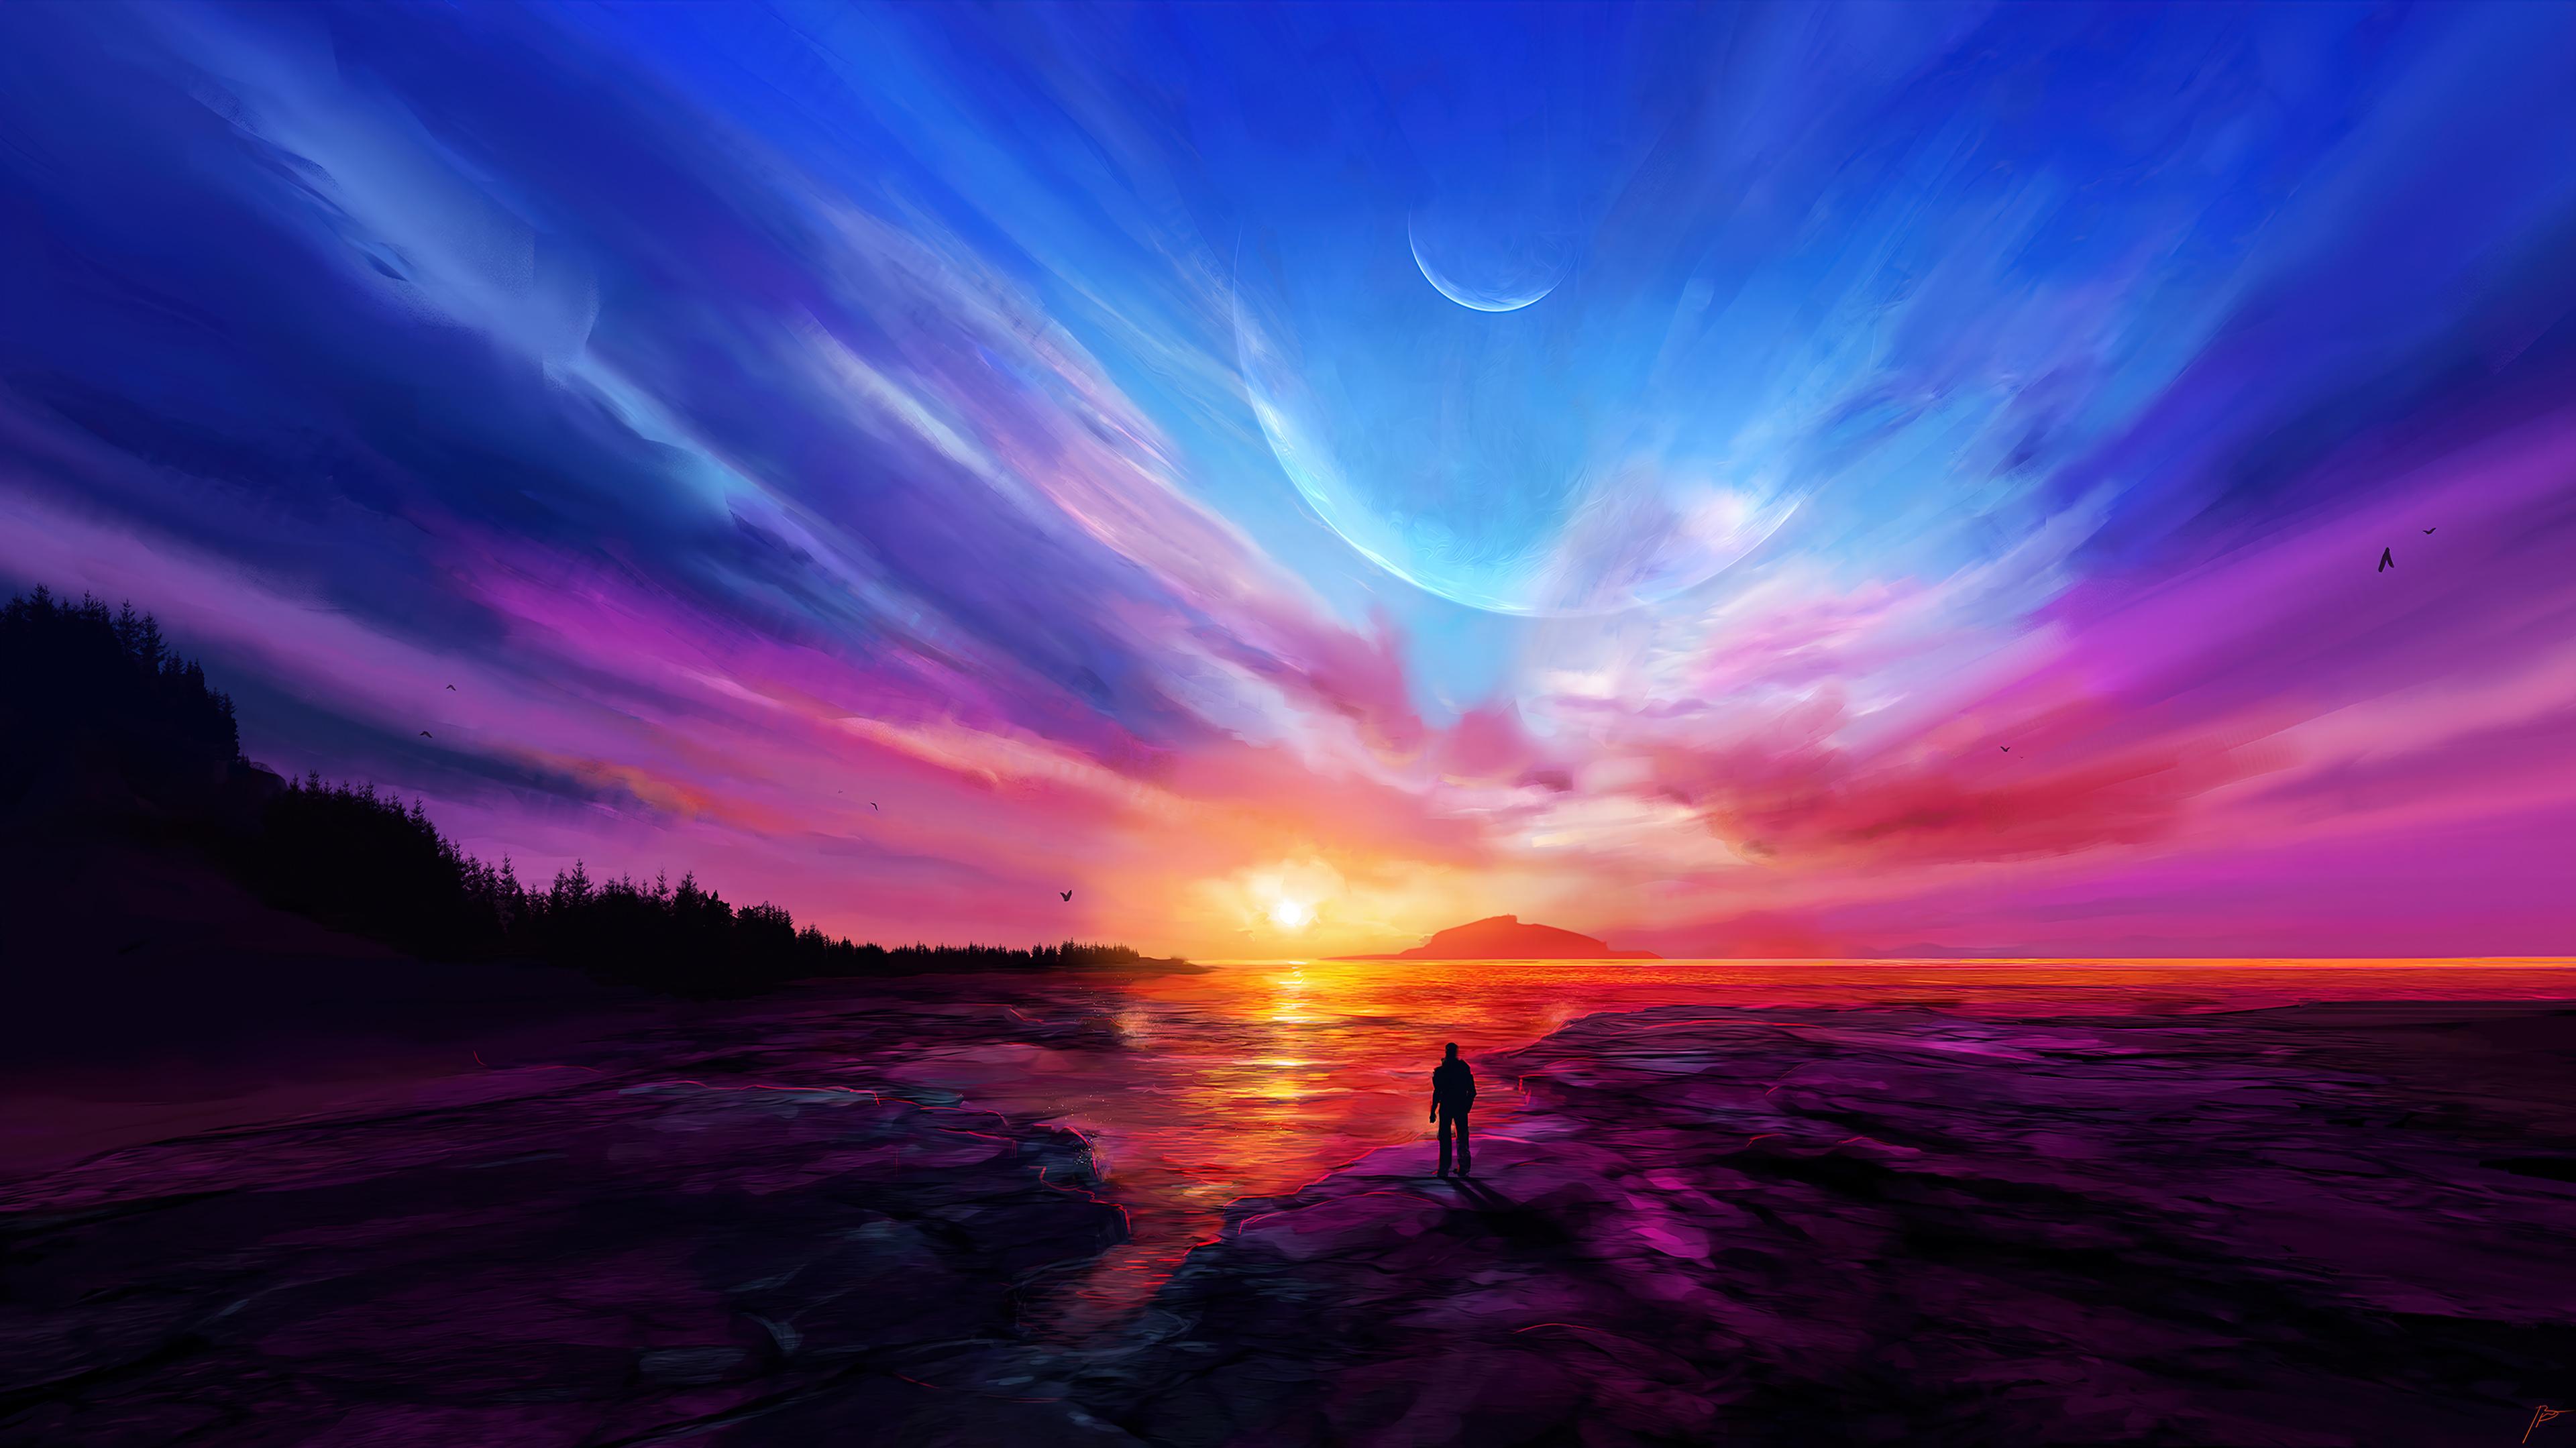 Sunset Scenery Art Wallpaper 4k Pc Desktop 6110b